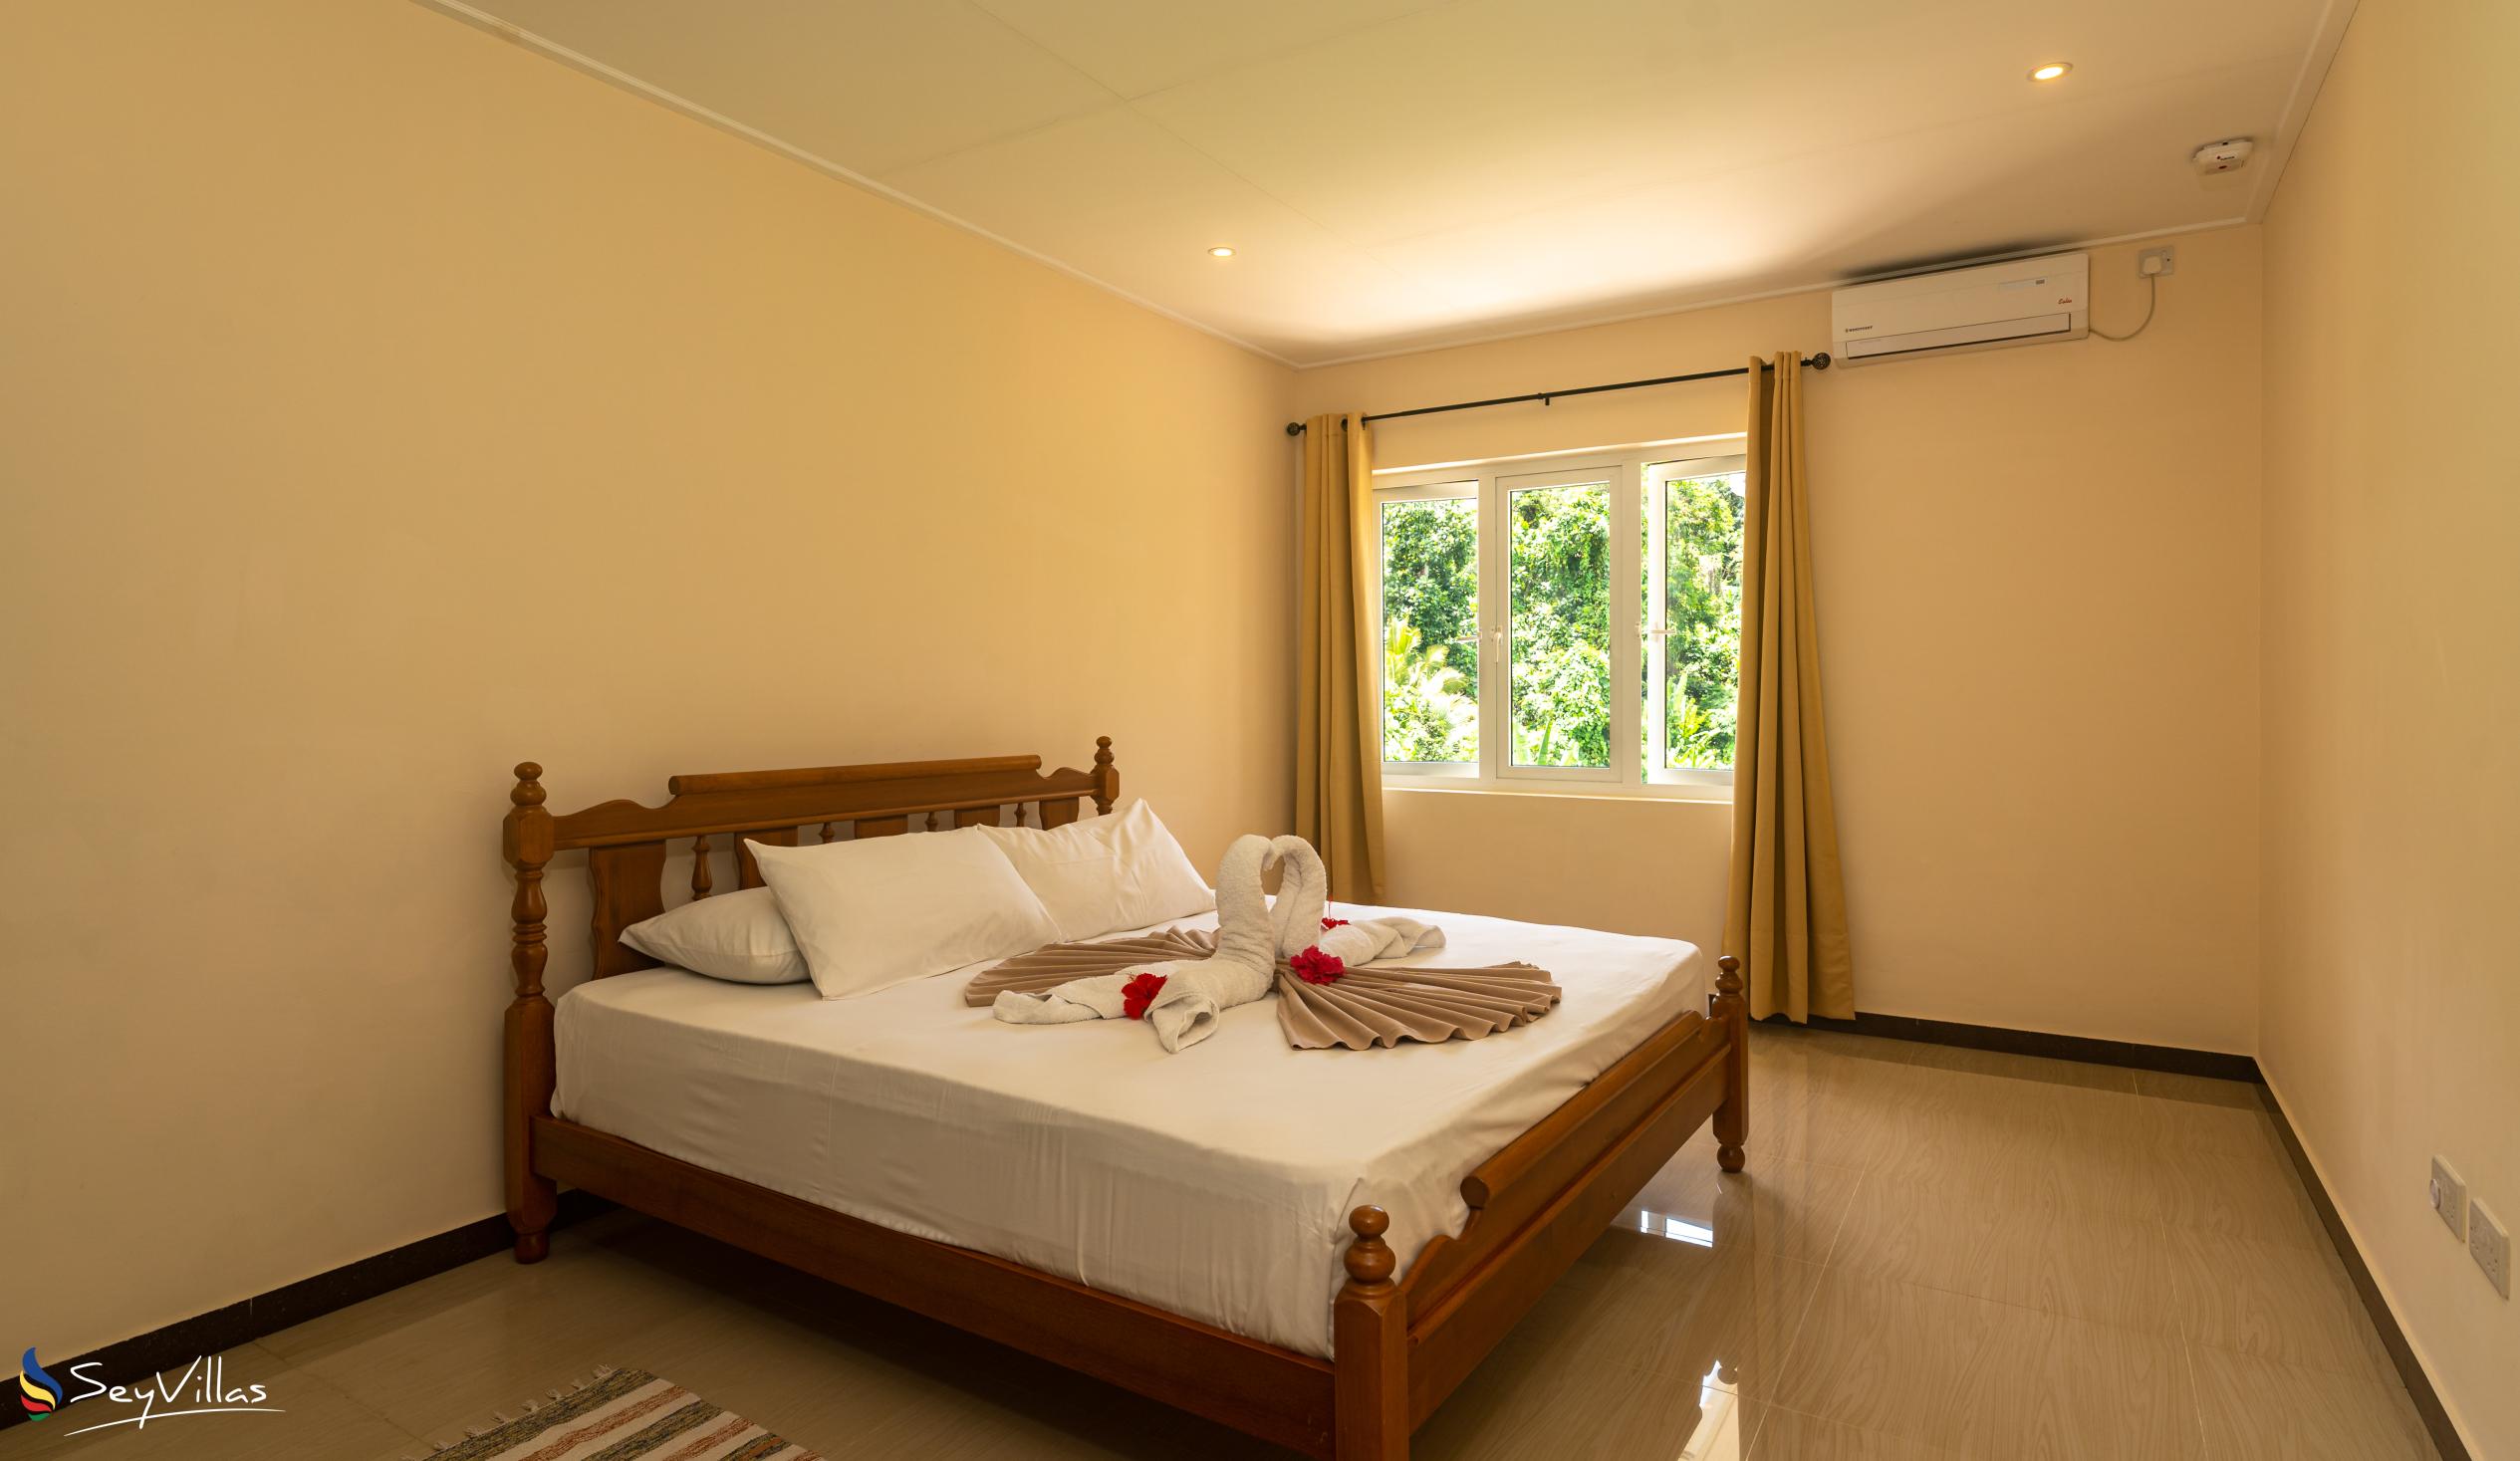 Foto 51: JAIDSS Holiday Apartments - Appartamento con 2 camere - Mahé (Seychelles)